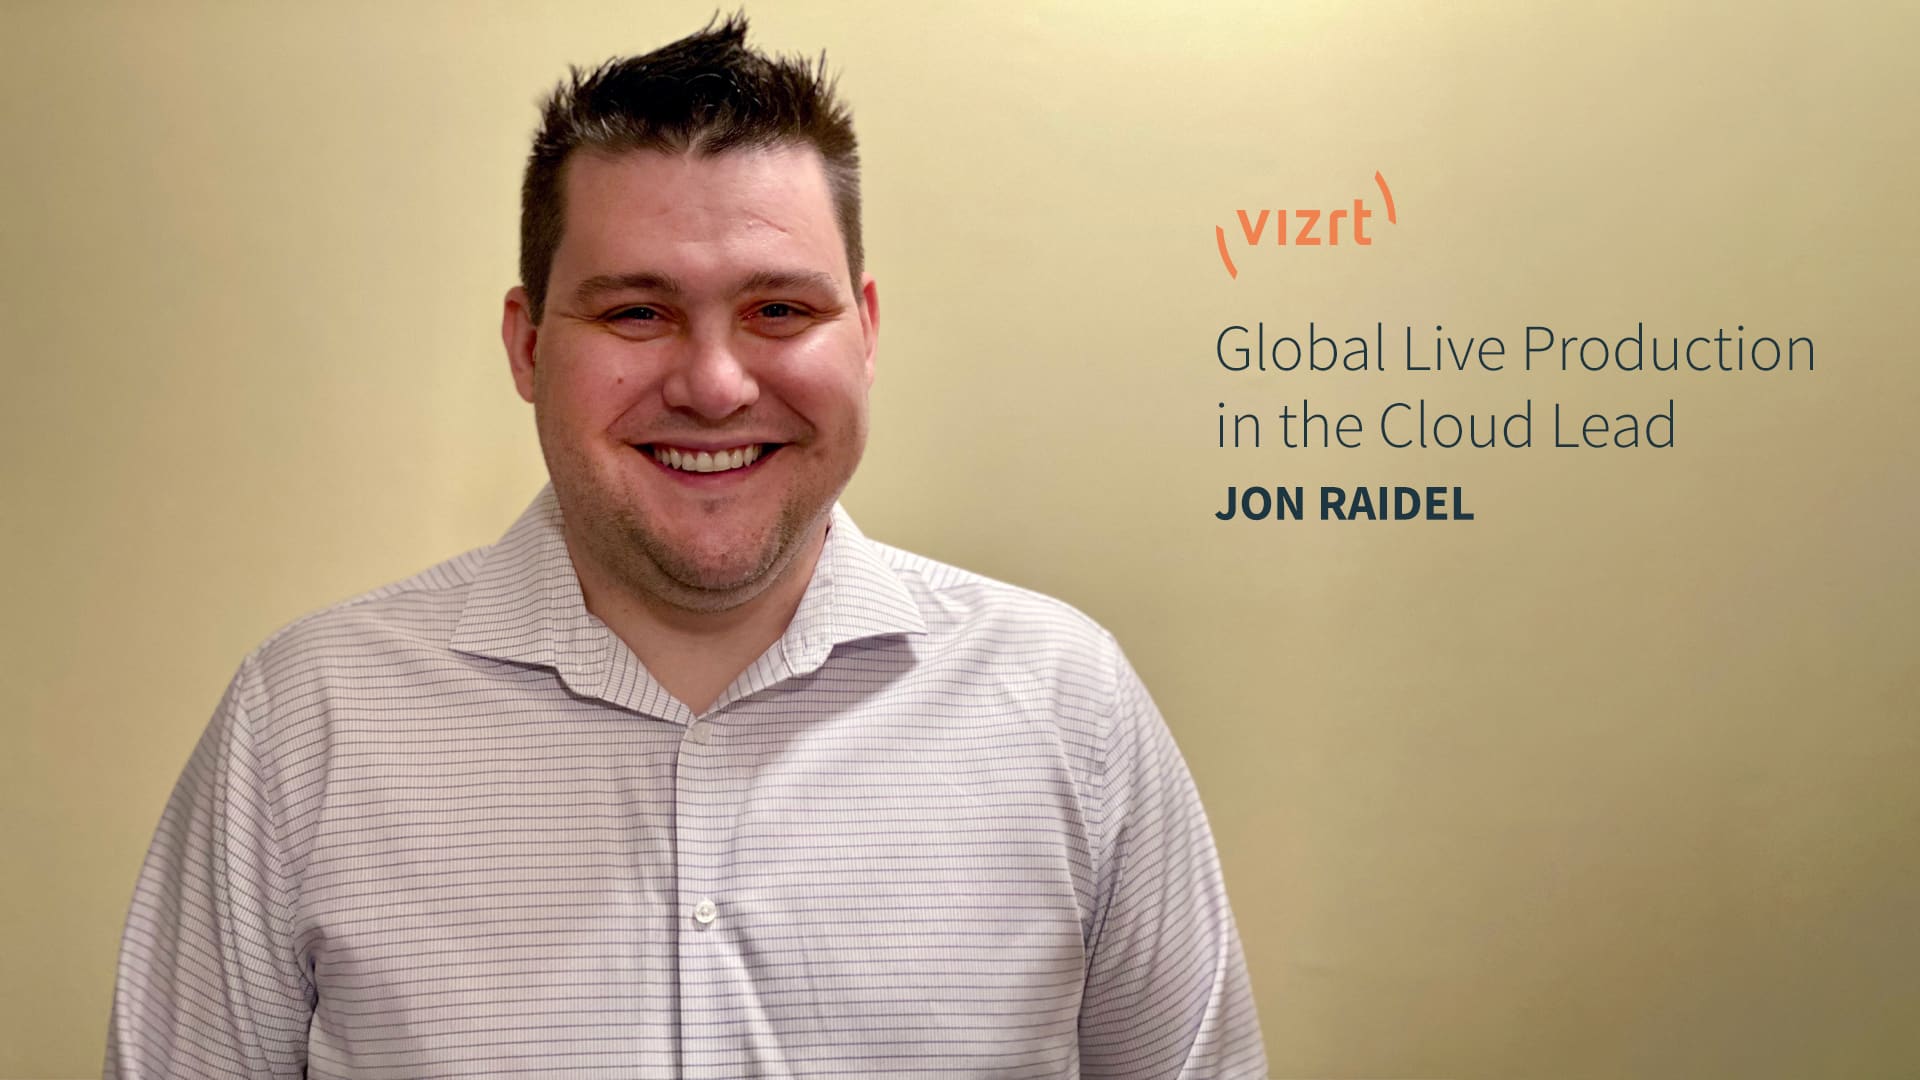 Vizrt hires Jon Raidel as Global Live Production in the Cloud Lead